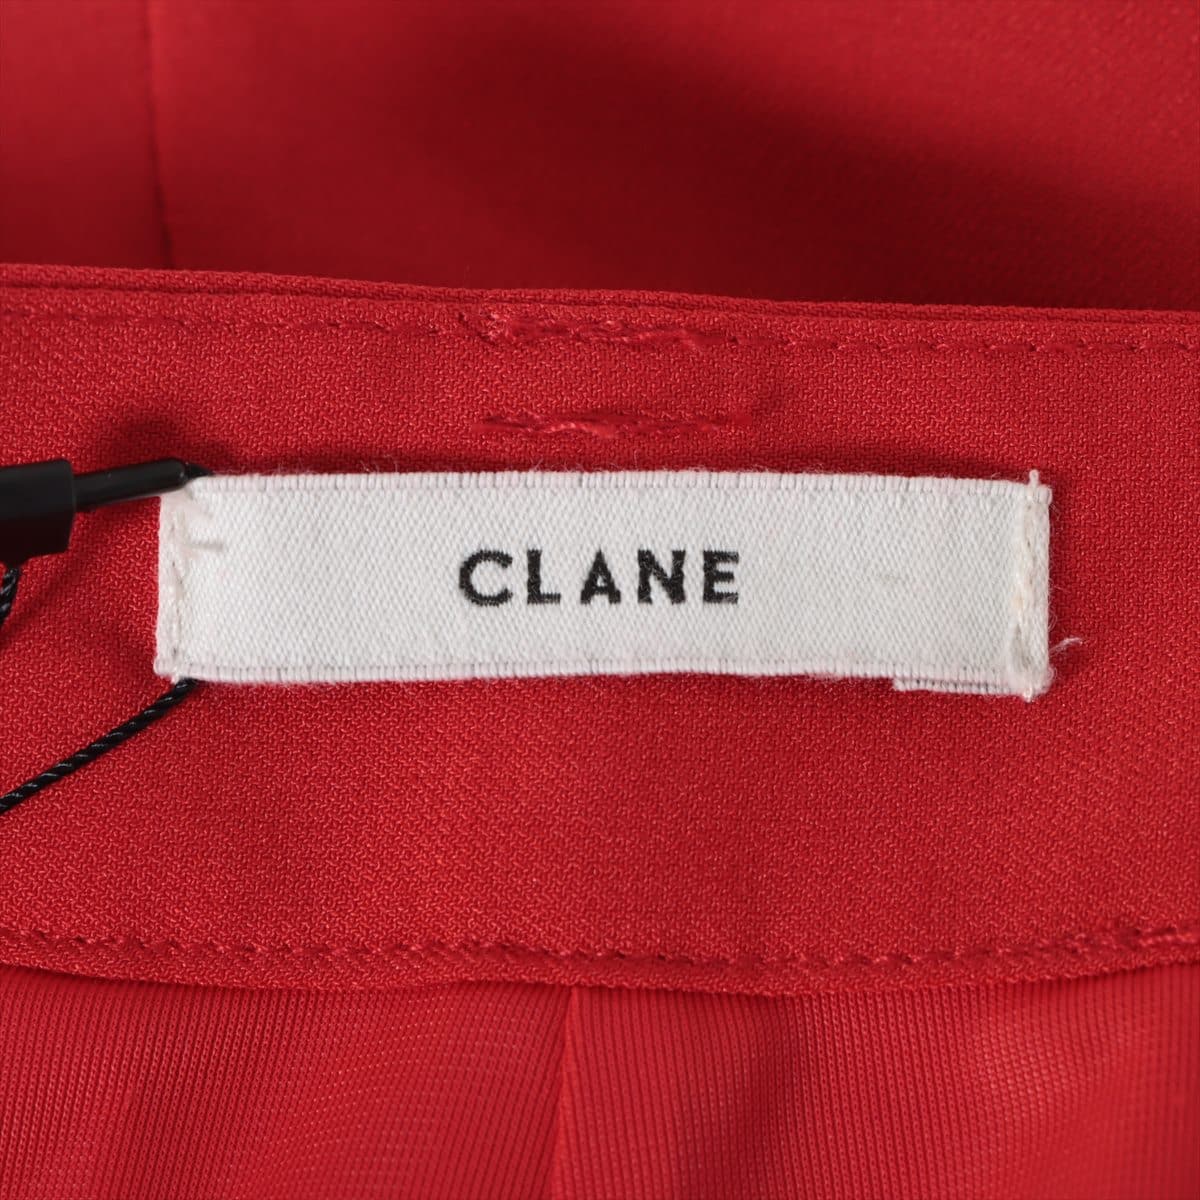 CLANE Polyester Slacks Ladies' Red